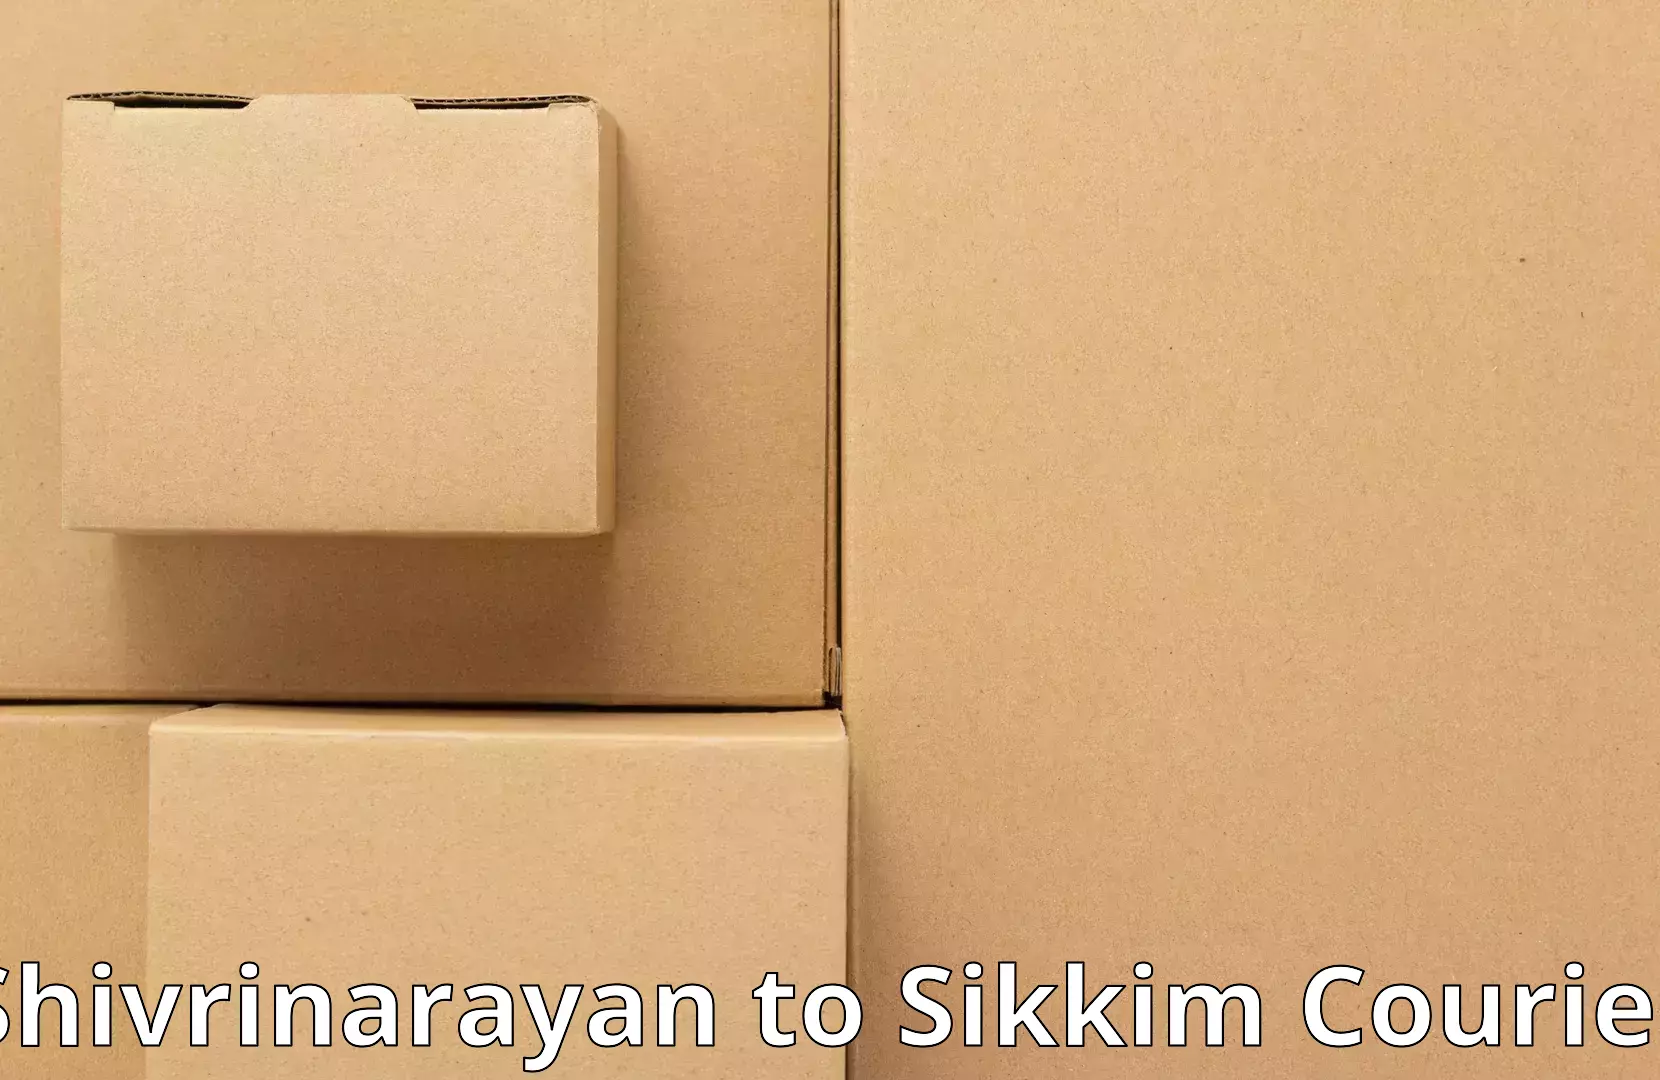 Seamless moving process Shivrinarayan to Mangan